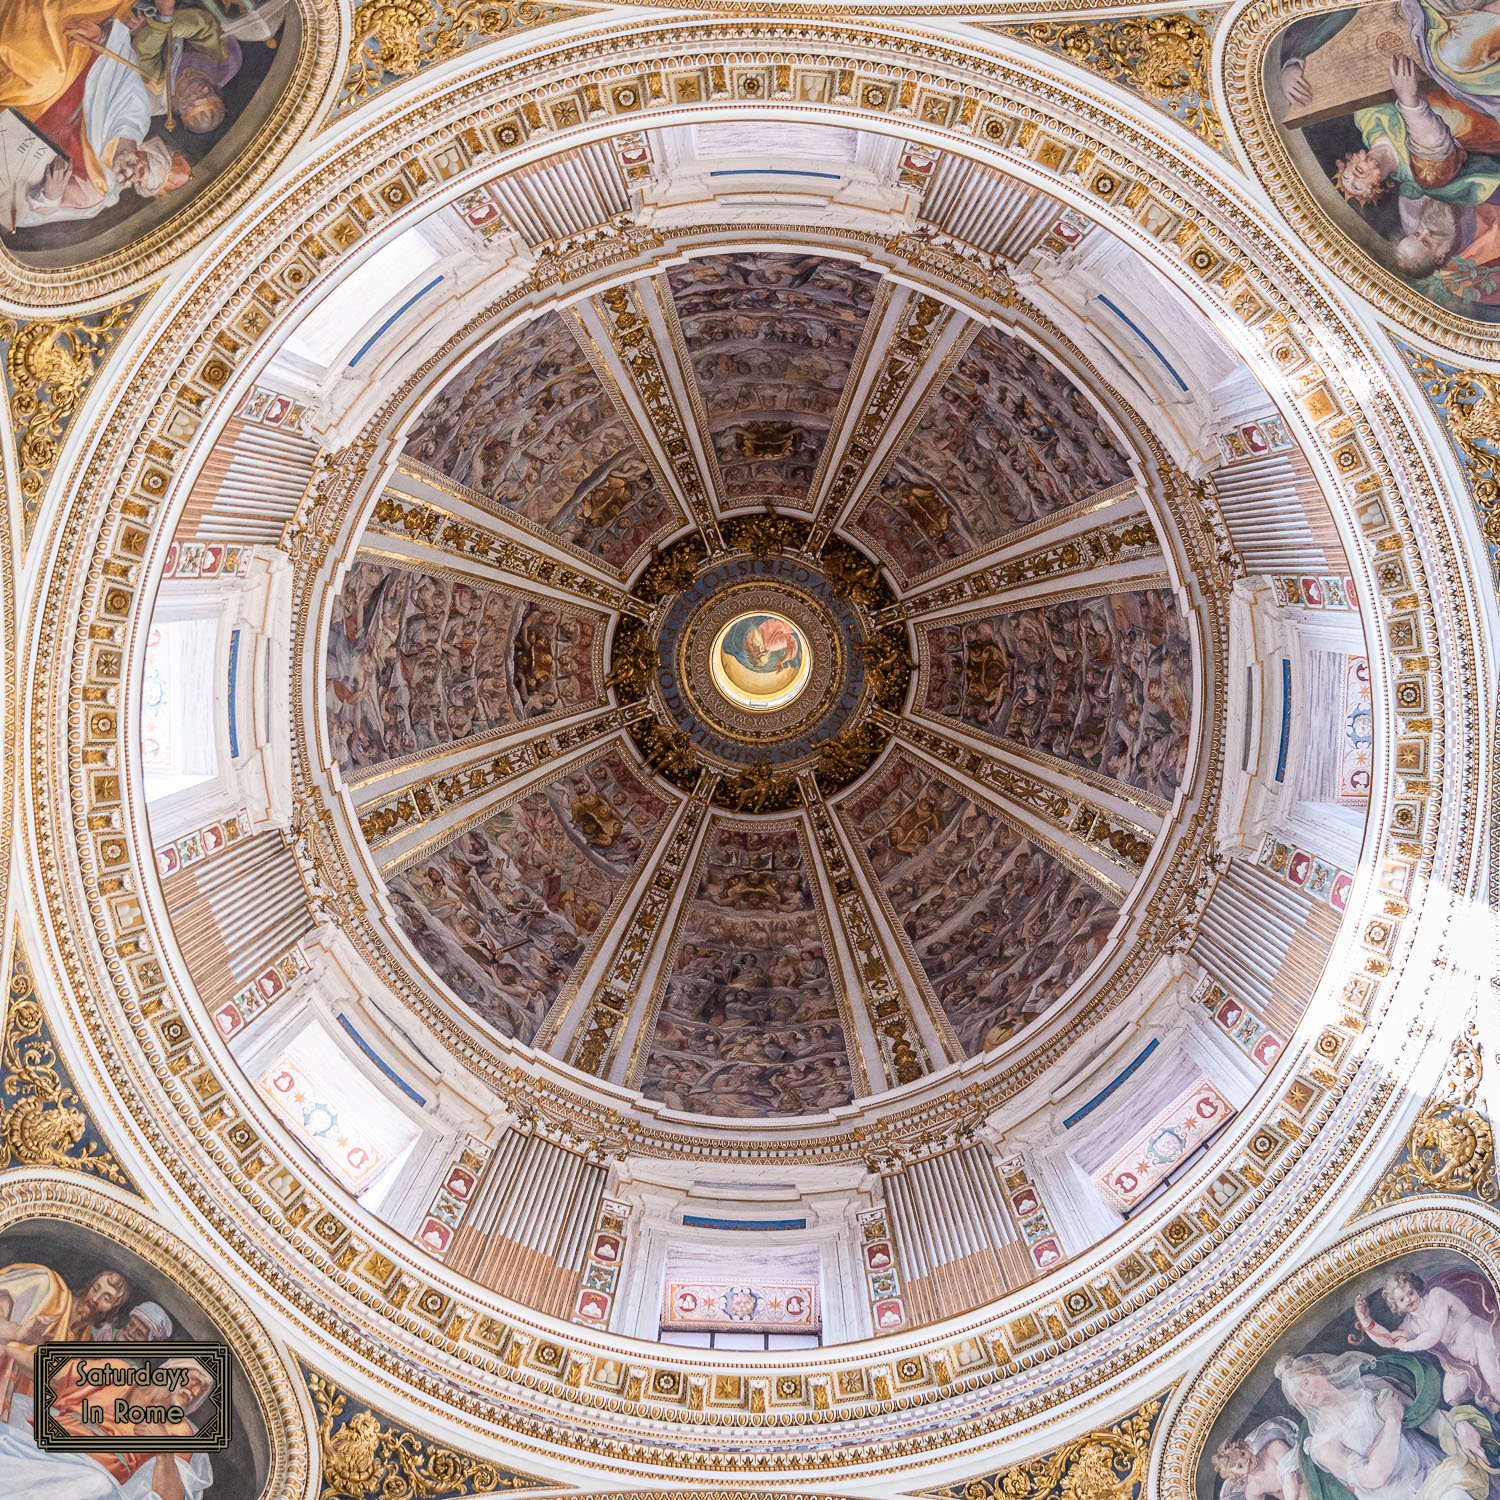 Basilica of Saint Mary Major - The Dome